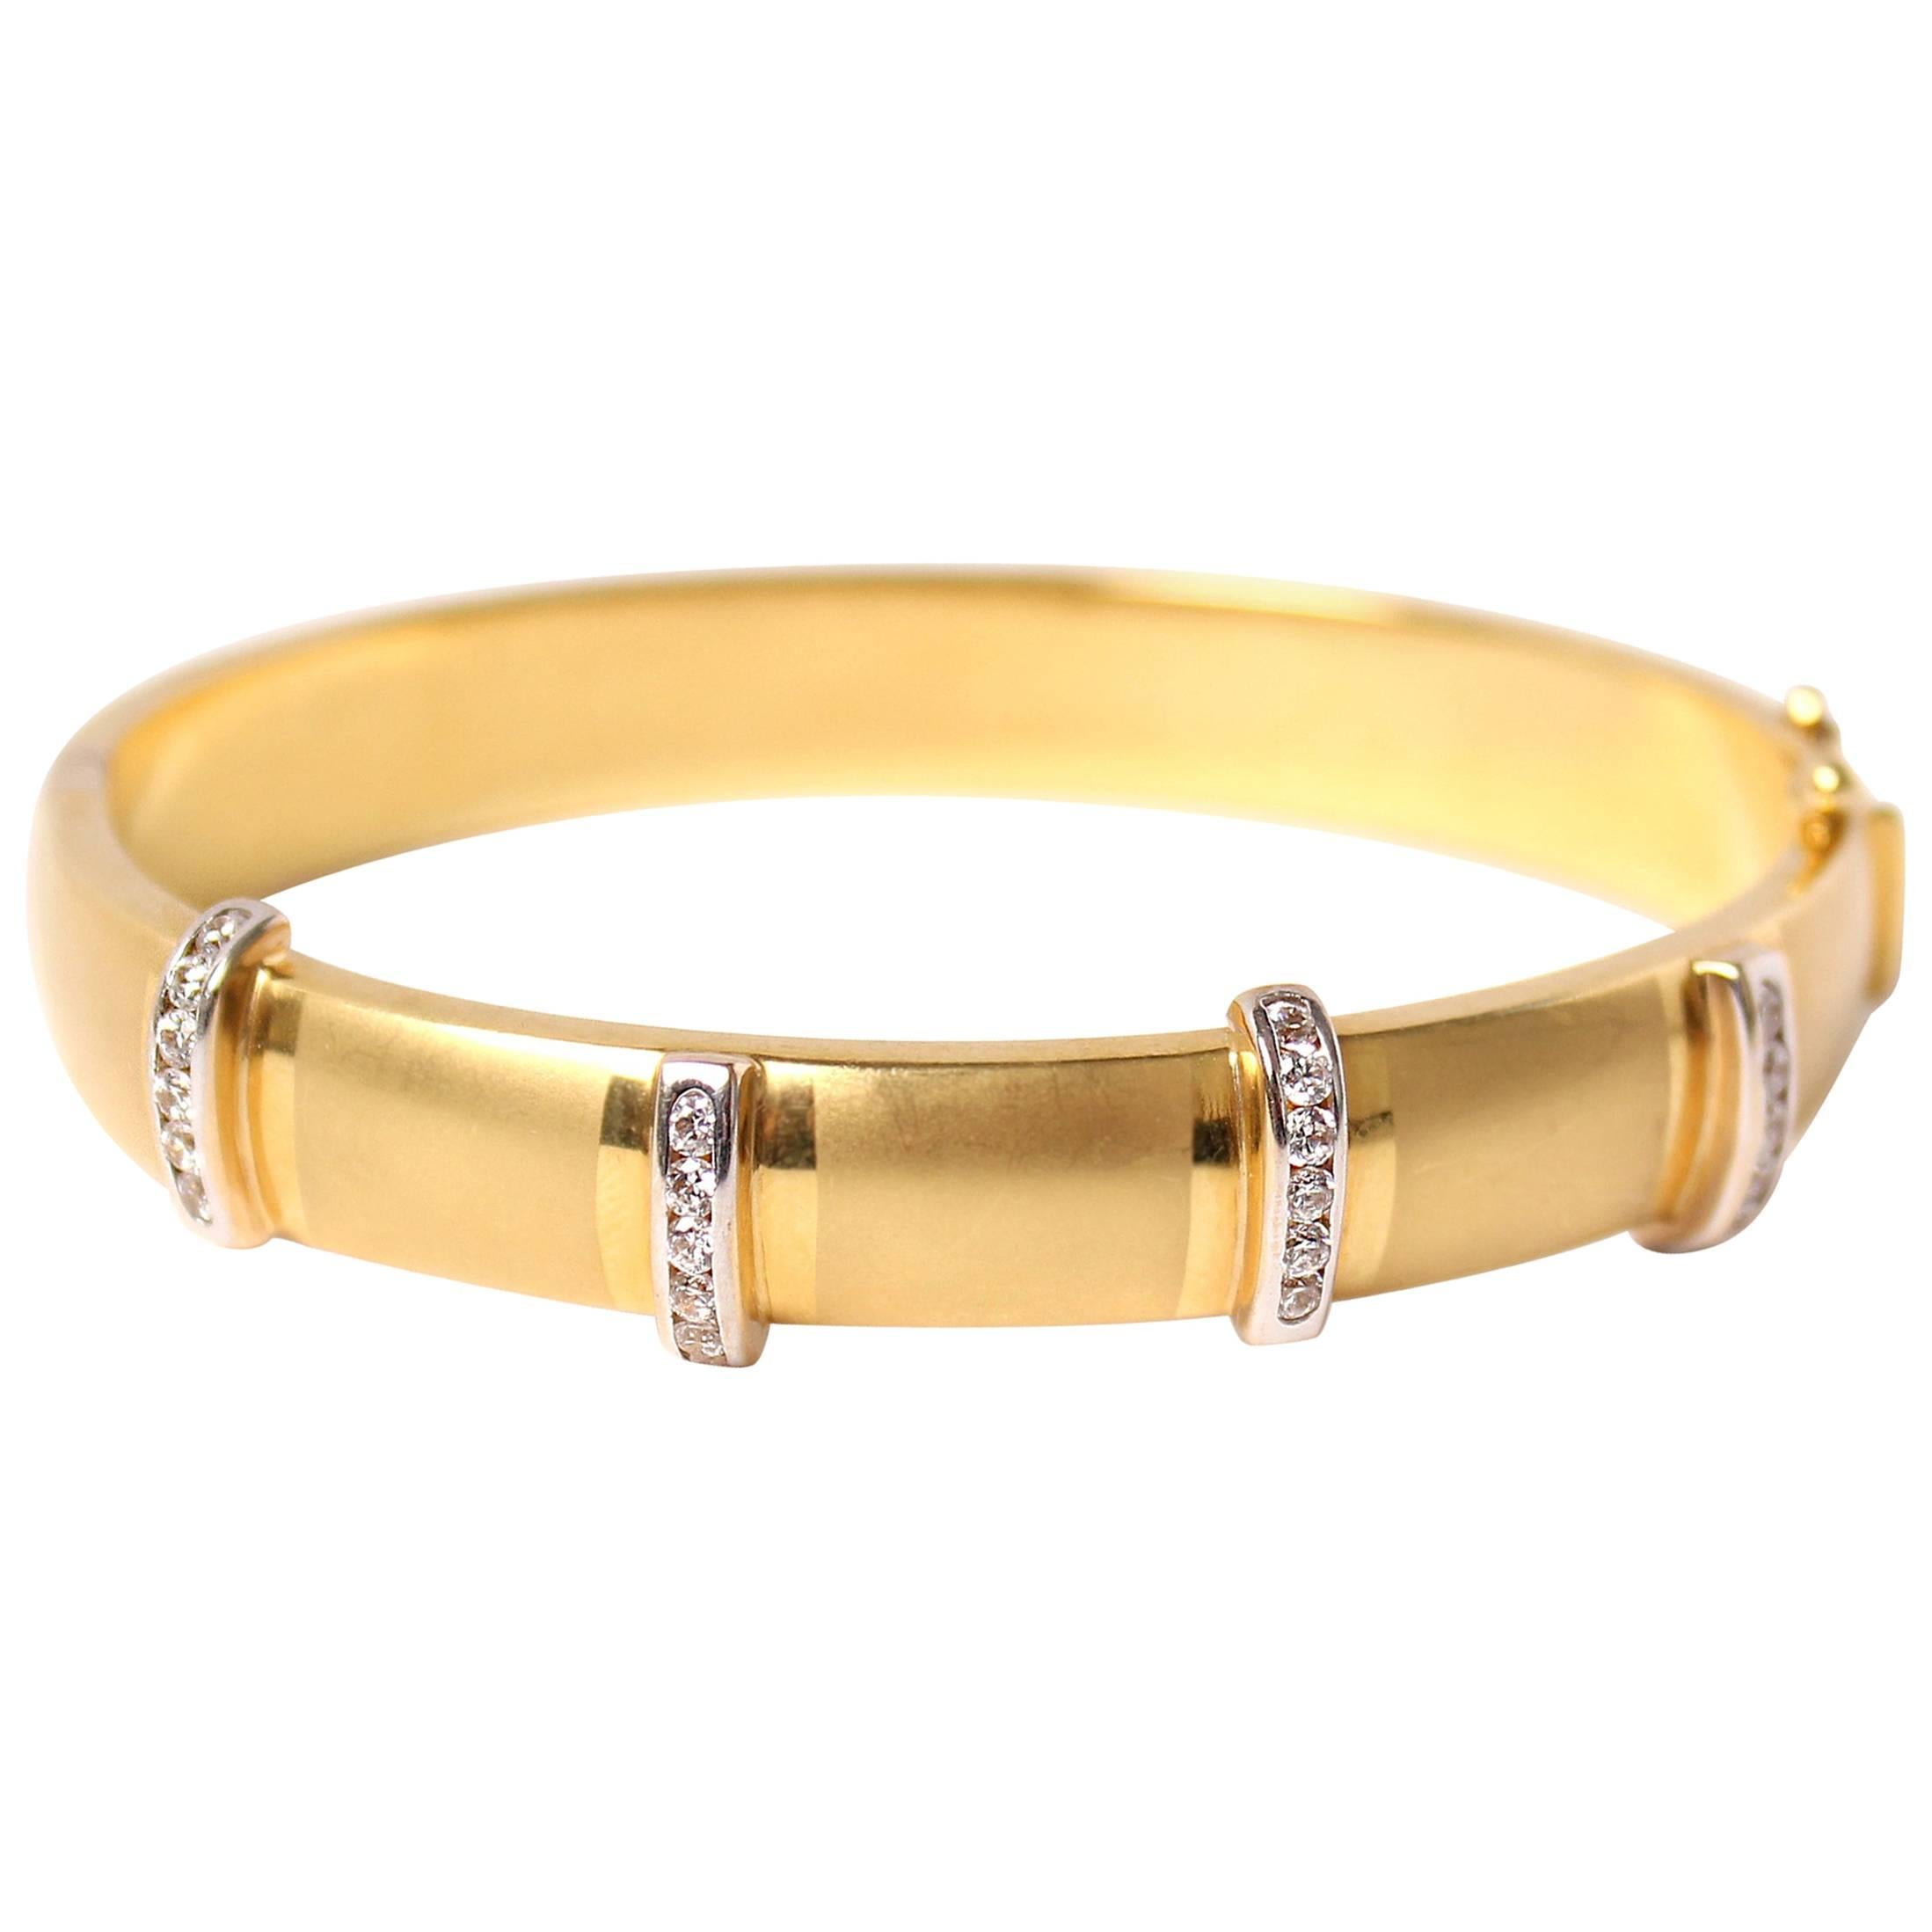 Clarissa Bronfman Antique 18 Karat Gold and Diamond Bracelet